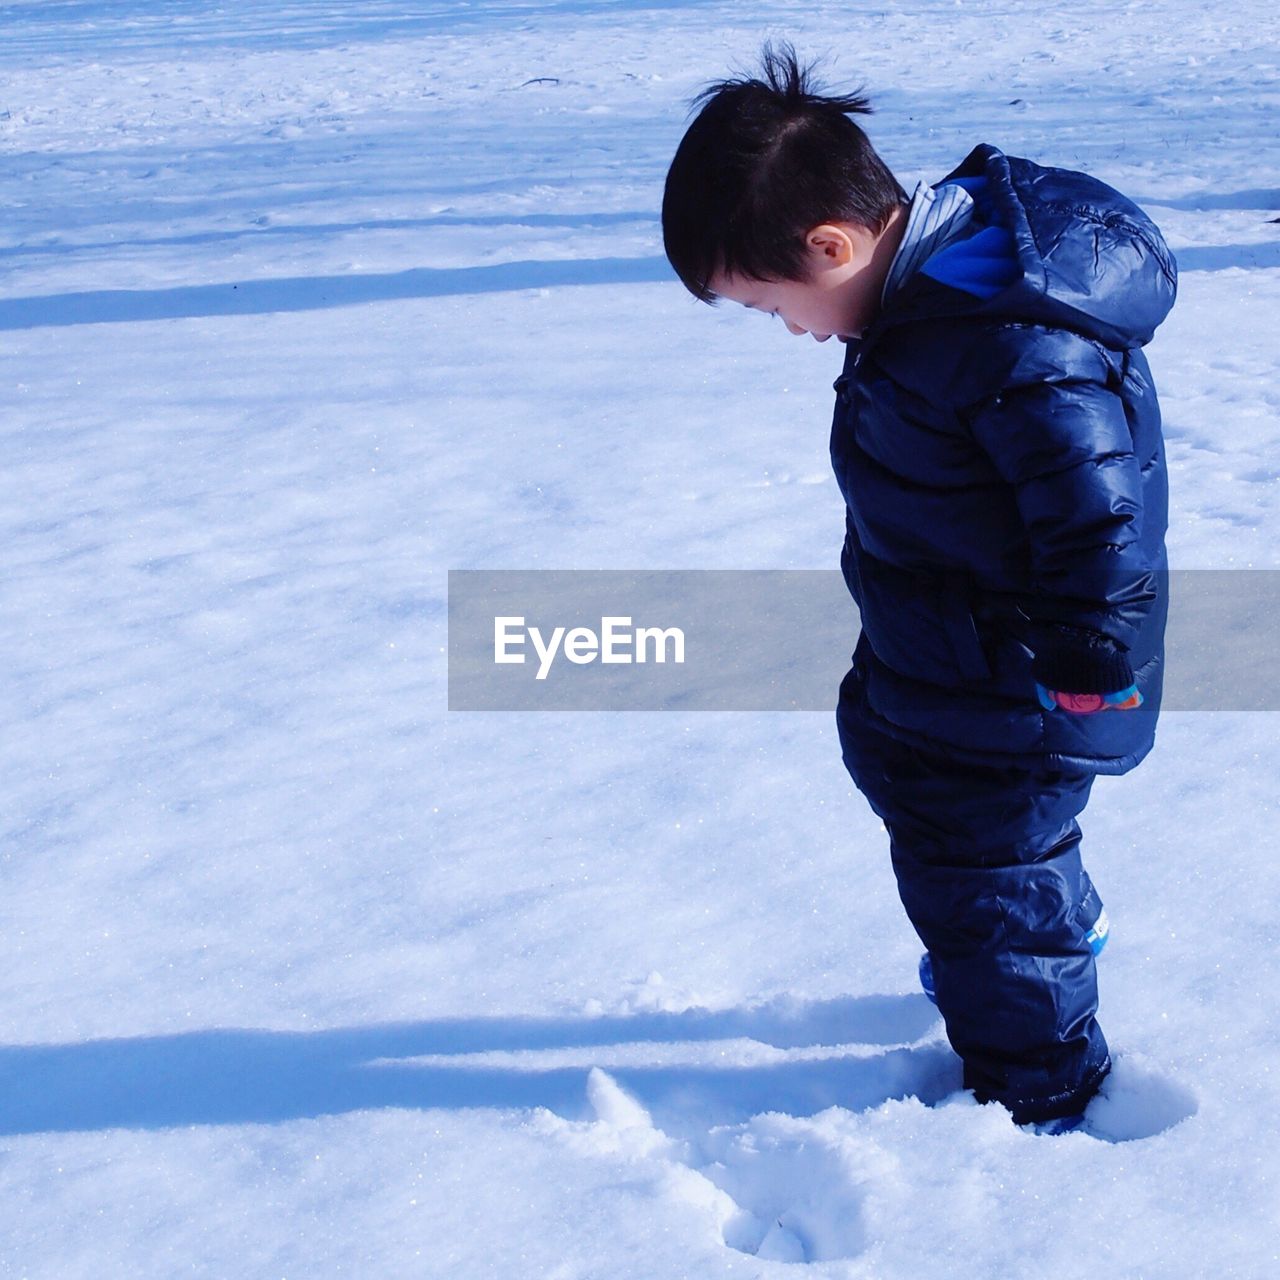 BOY STANDING ON SNOW